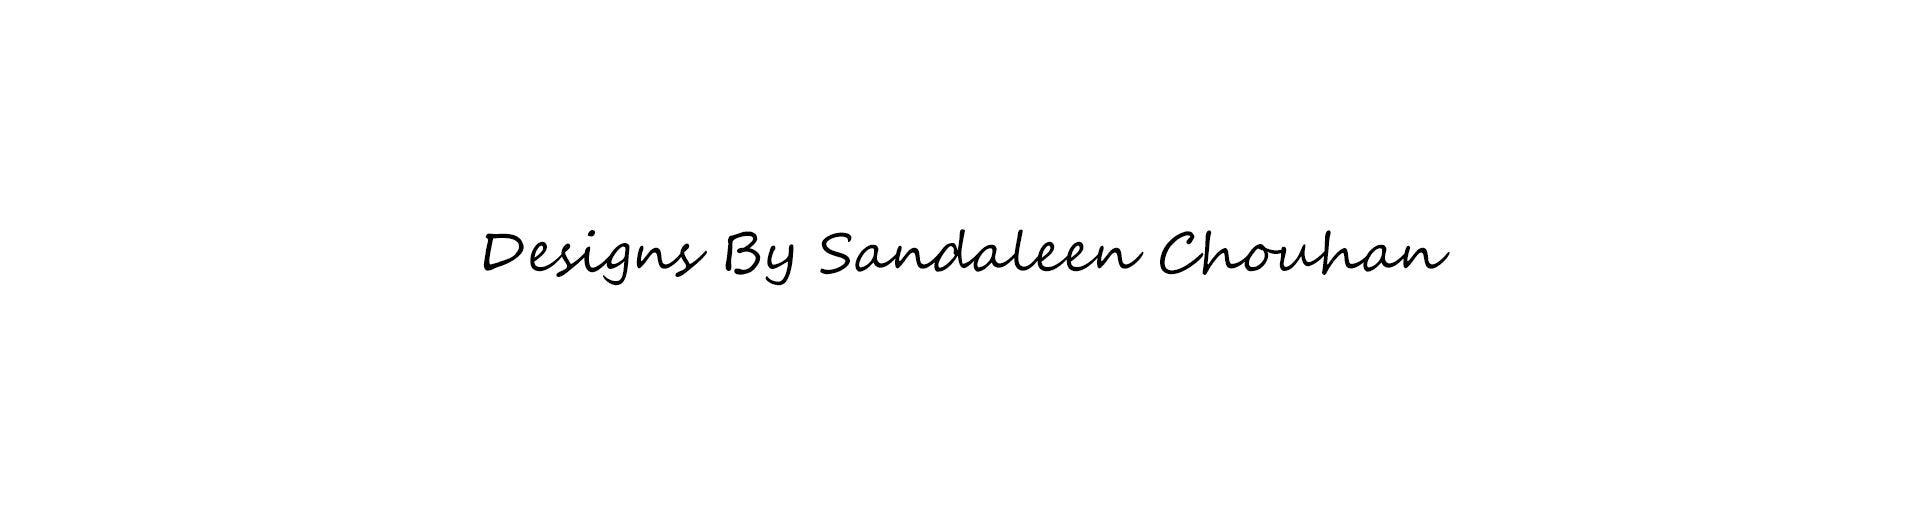 Sandaleen Chouhan